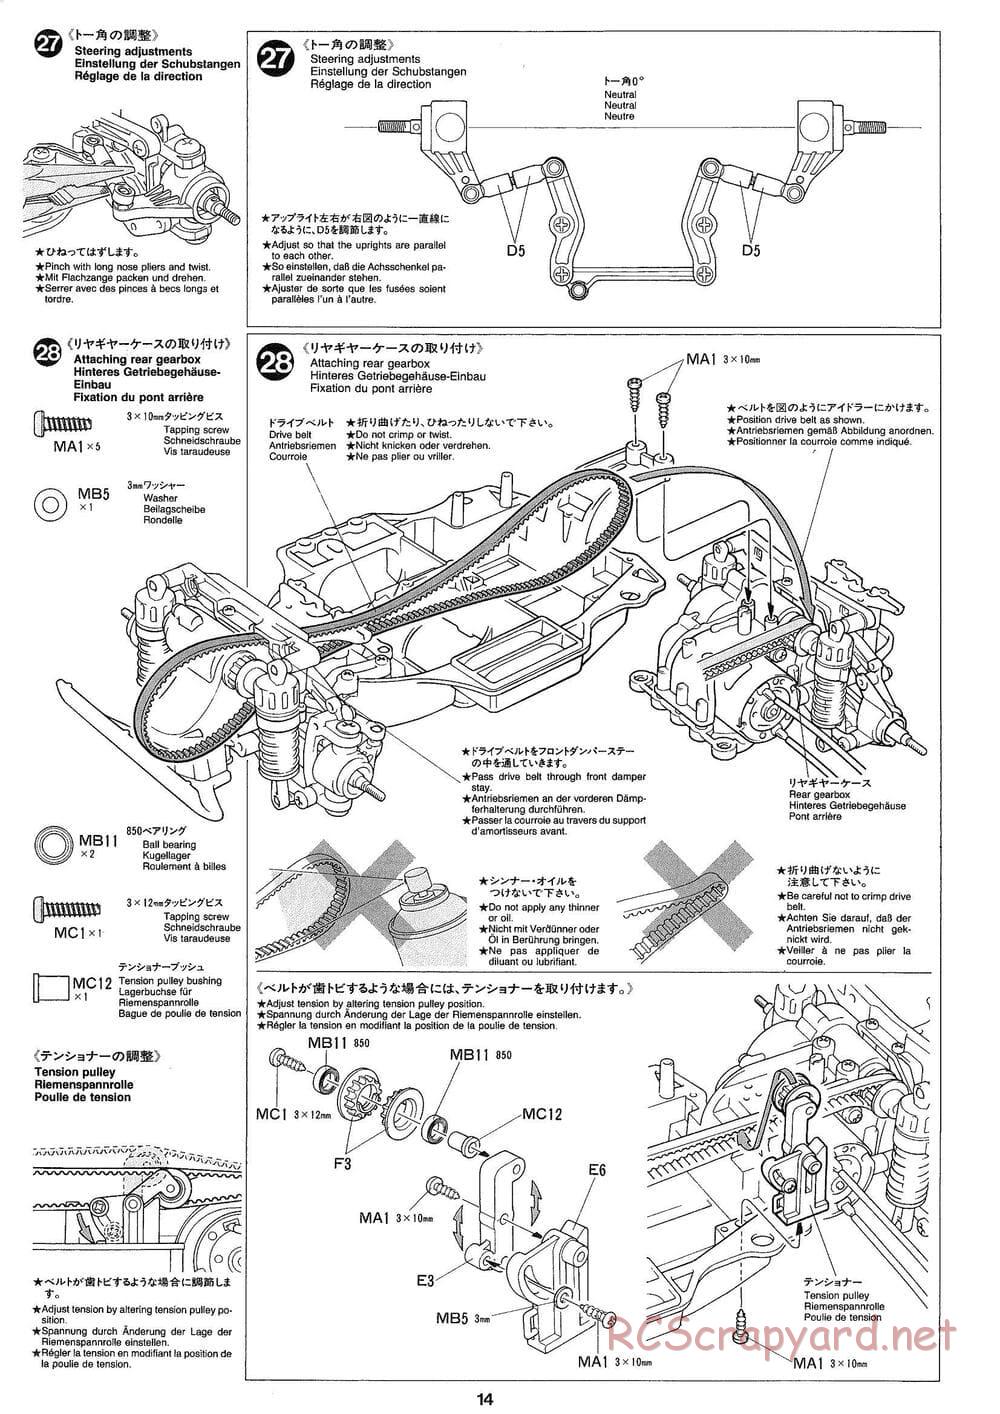 Tamiya - Mobil 1 NSX - TA-03R Chassis - Manual - Page 14